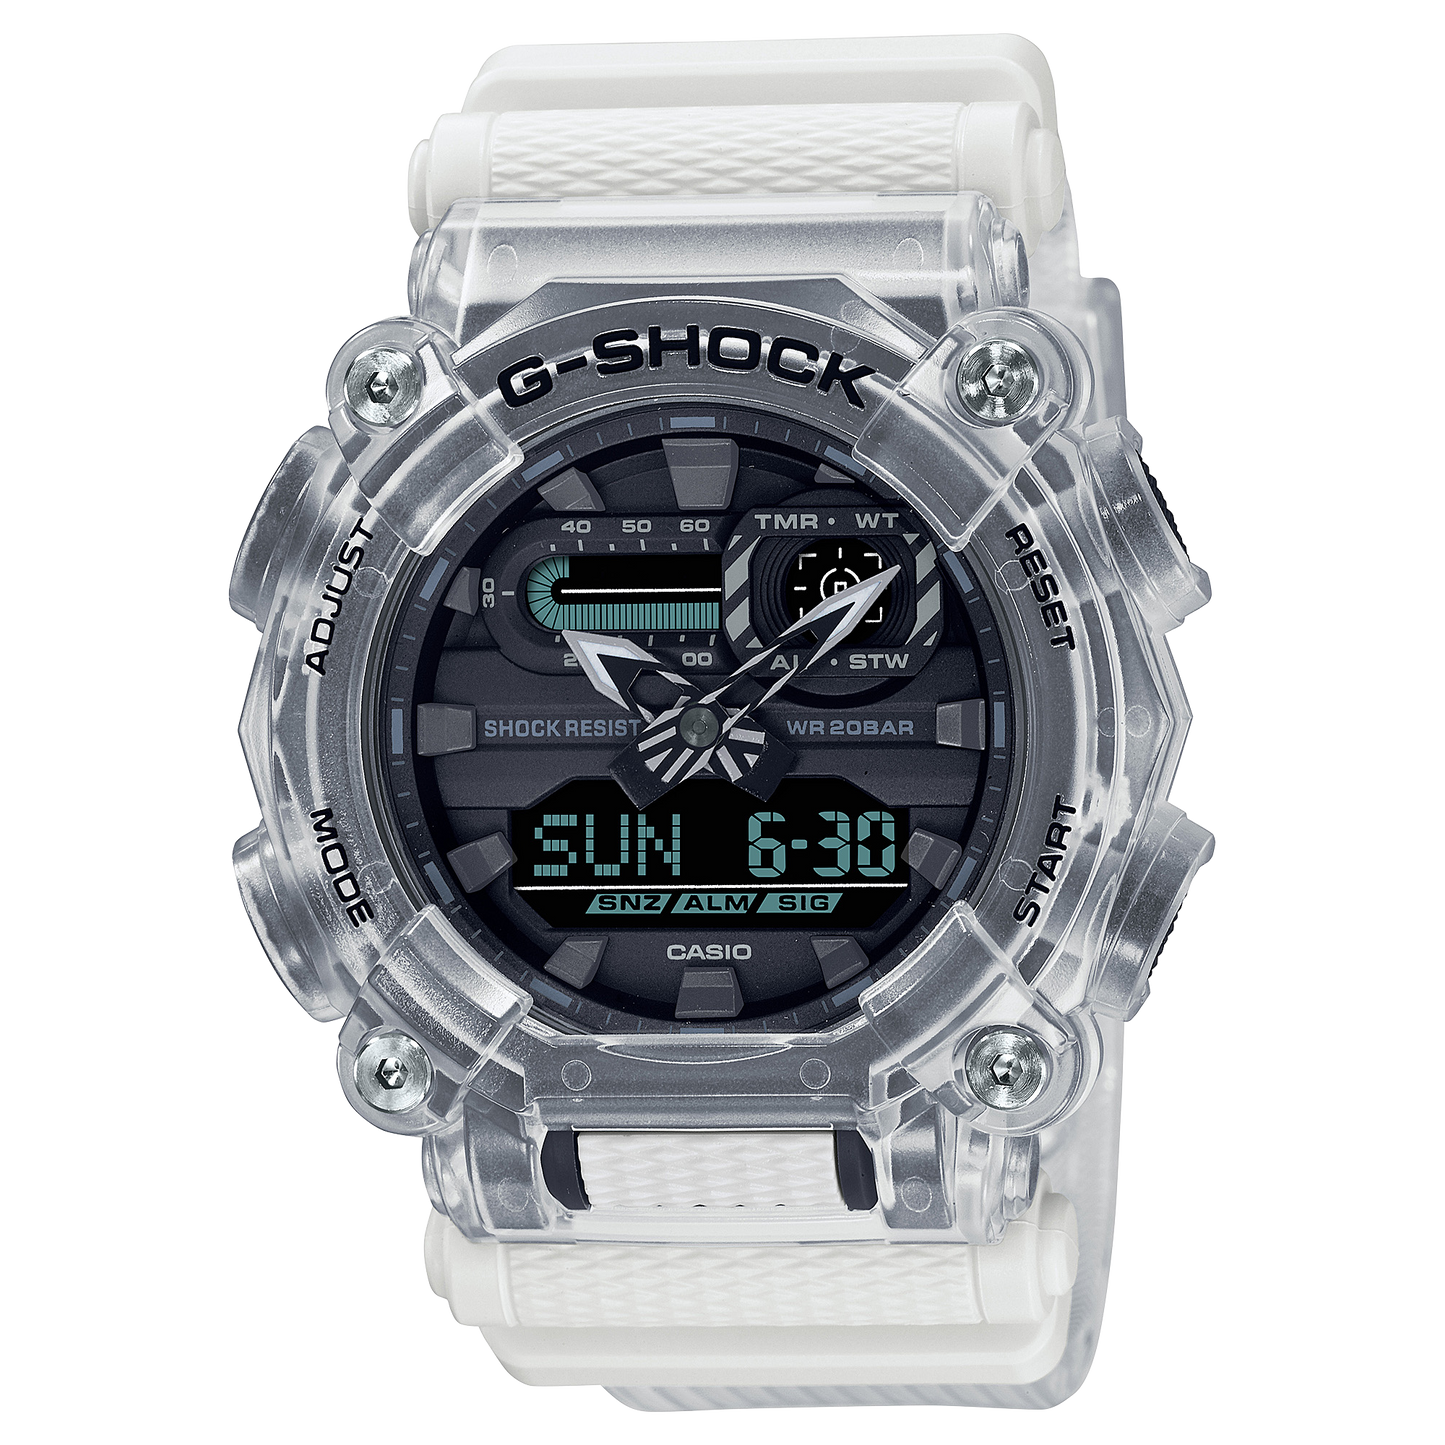 Casio G-Shock GA-900SKL-7ADR Analog-Digital Men's Watch, White